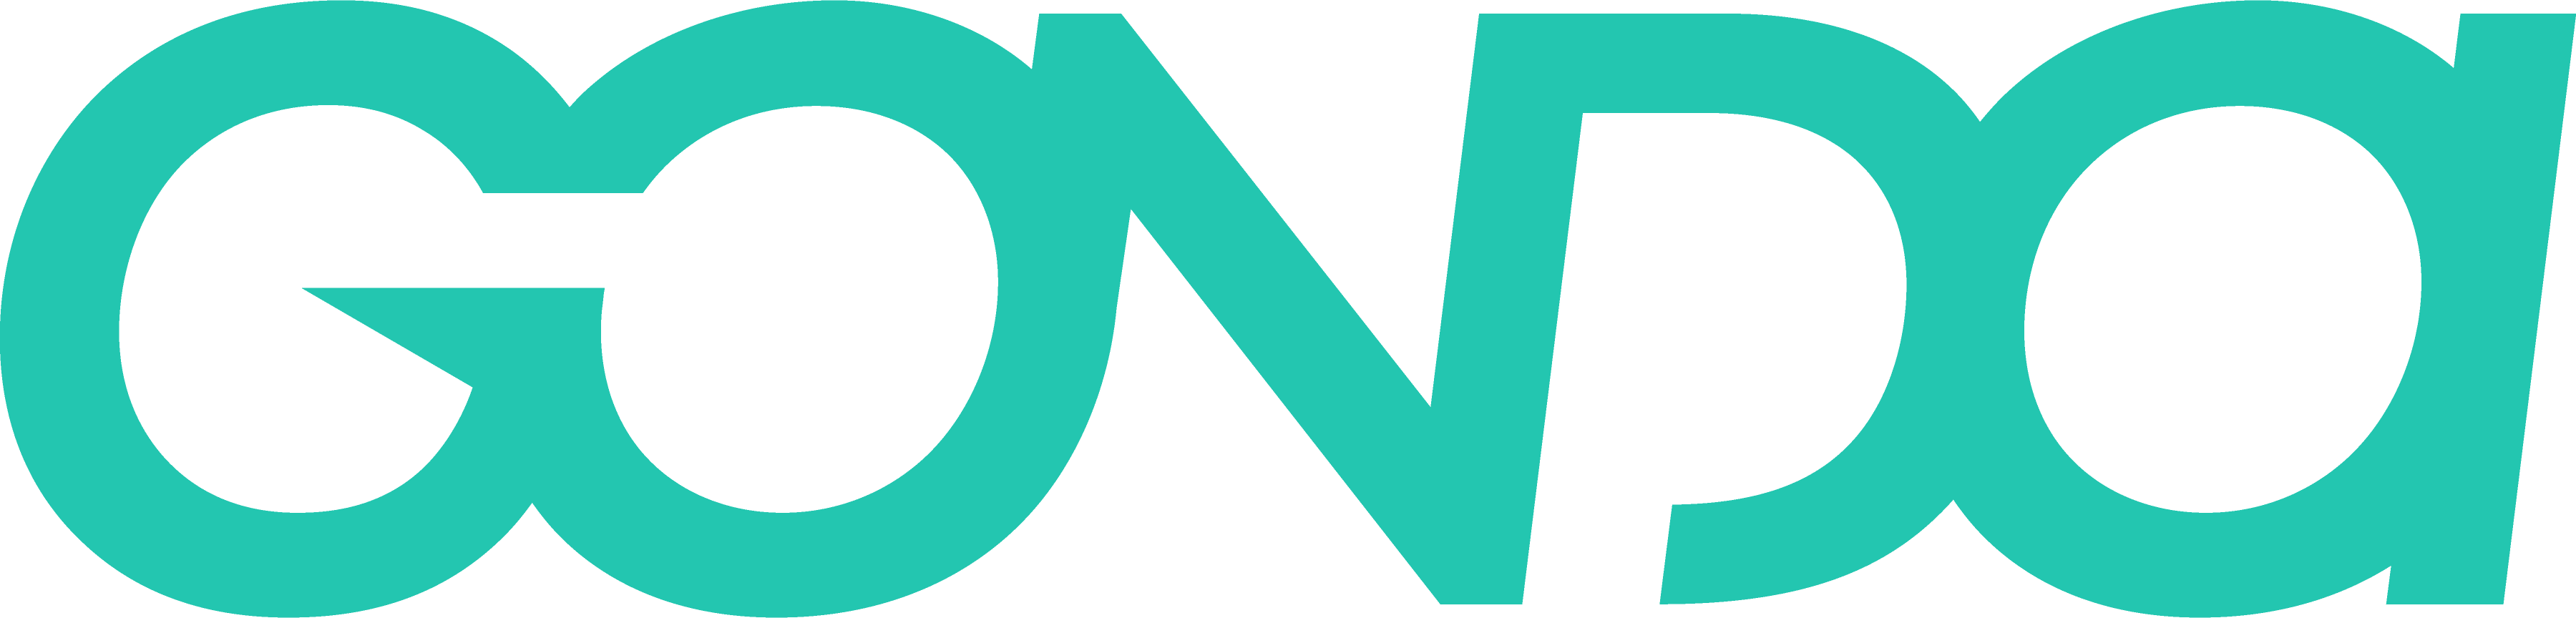 ivett-gonda-logo-full-color-rgb